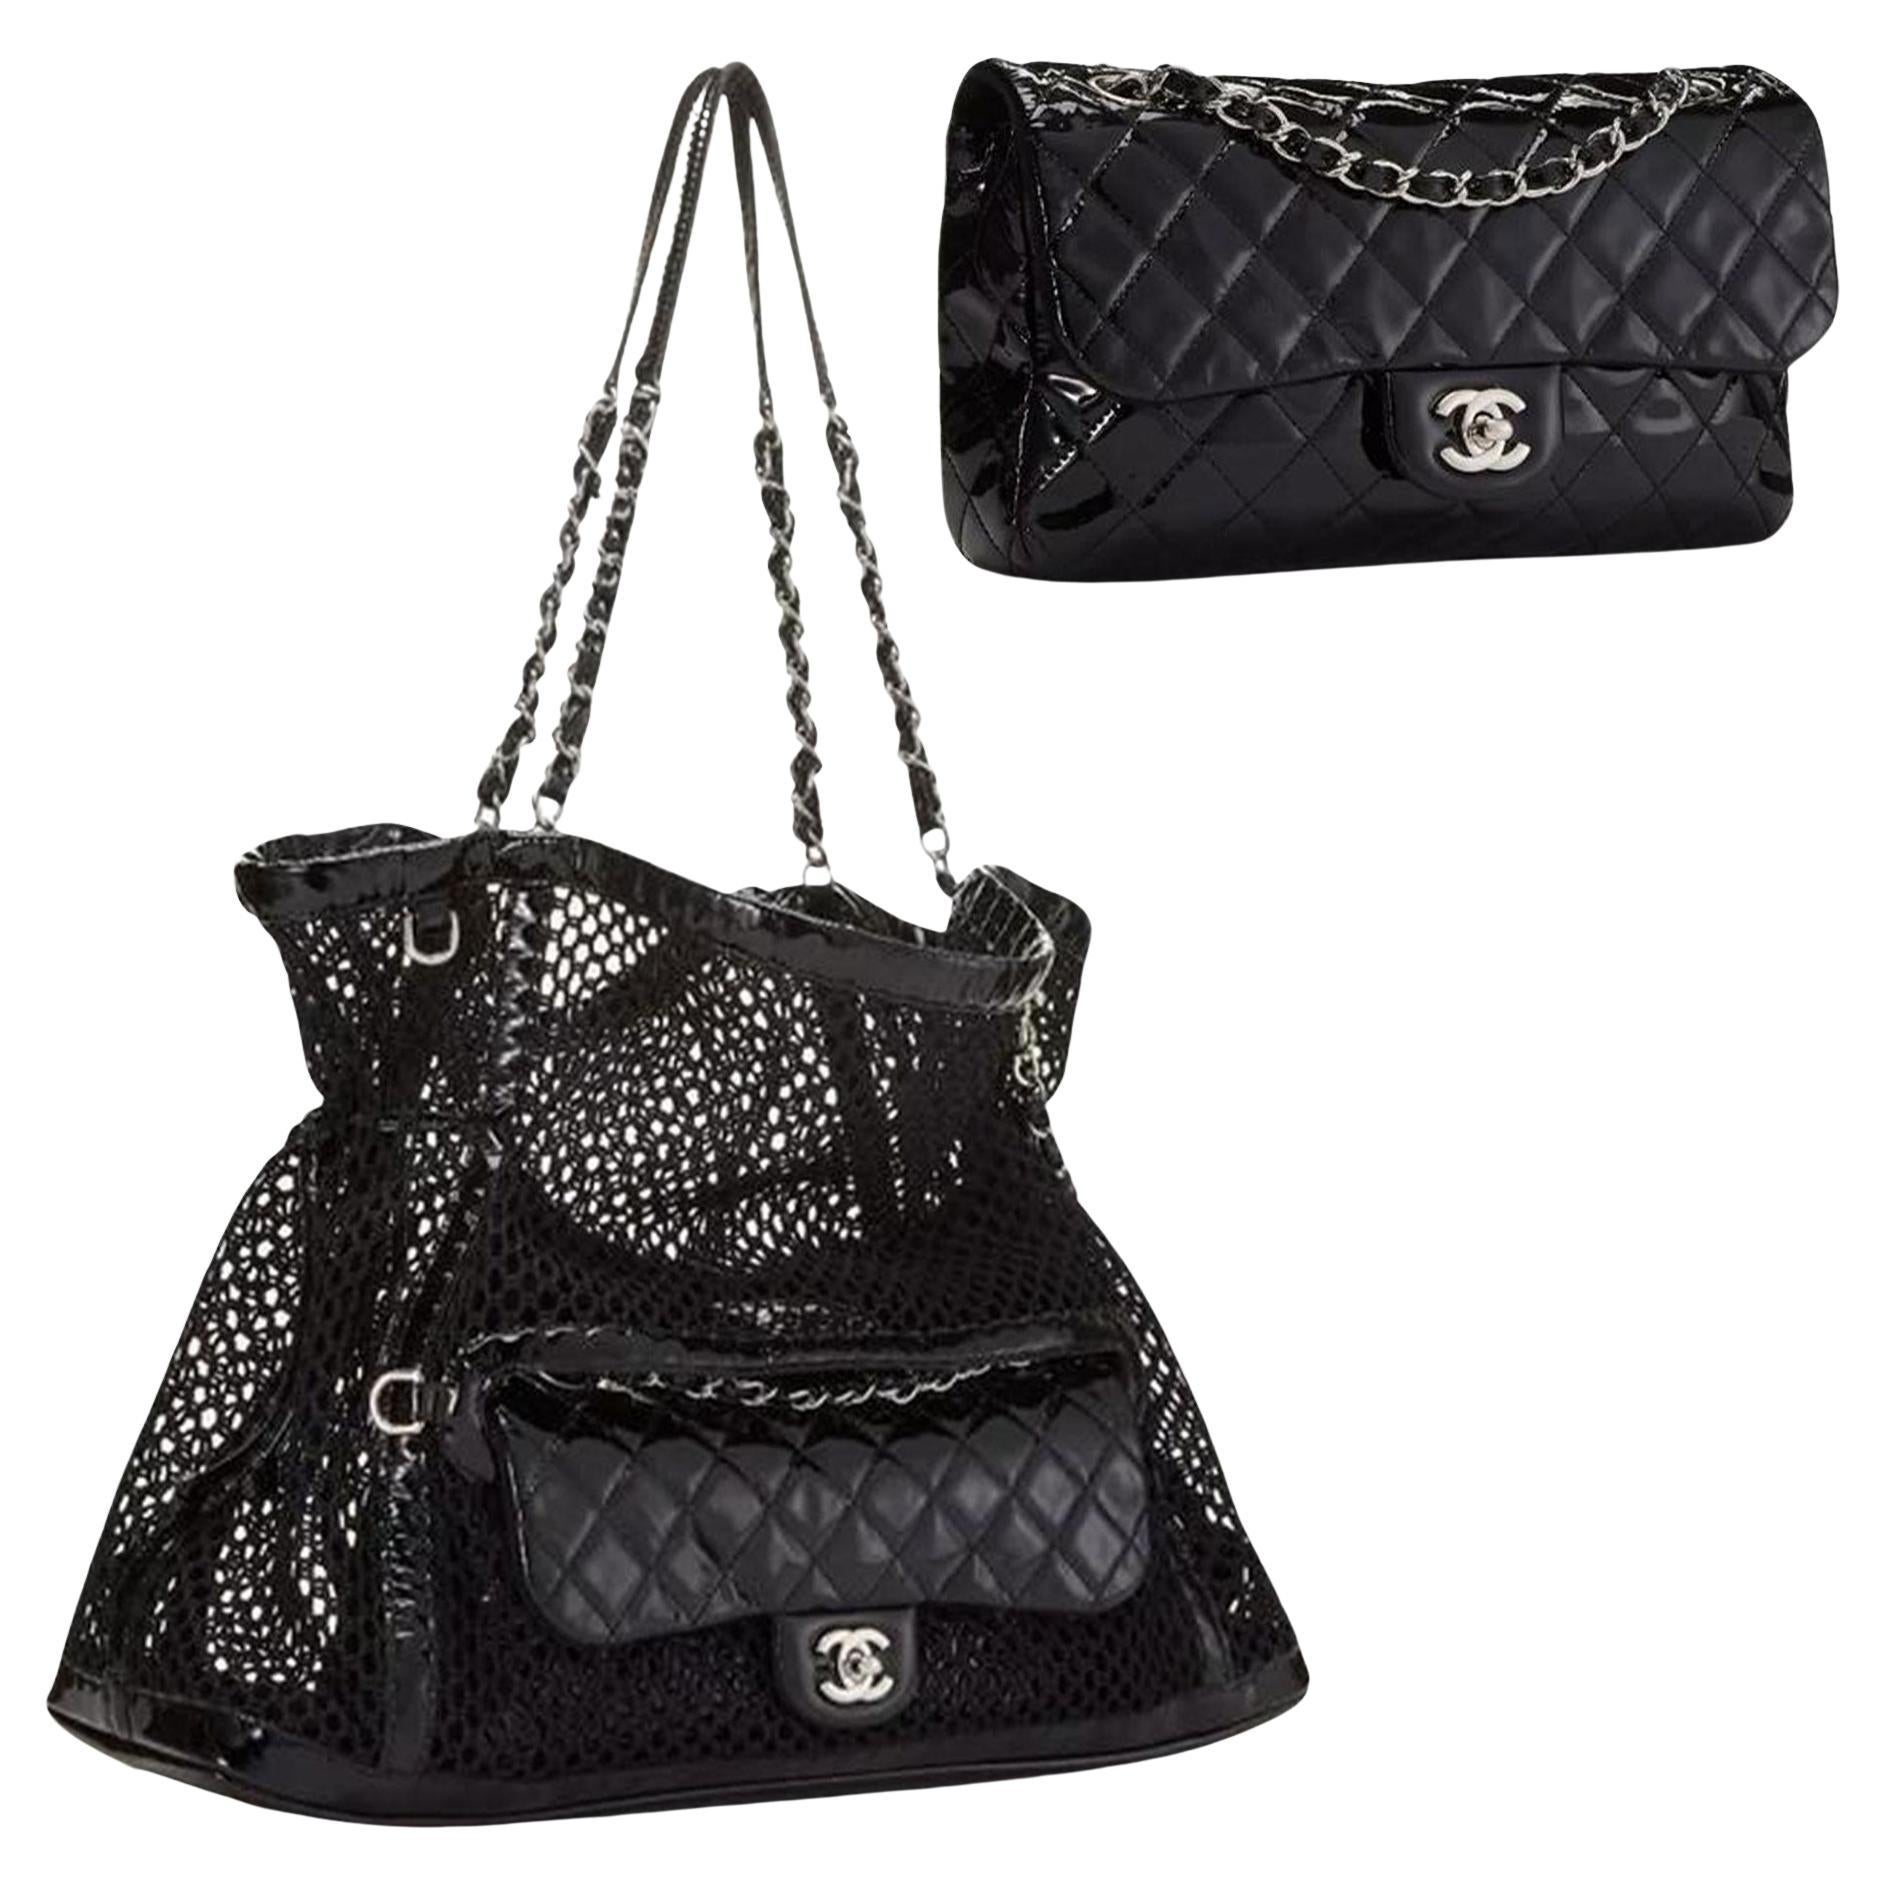 2 in 1 Chanel Shopping Classic Flap Cruise Mesh Woven Crochet Black Patent Bag